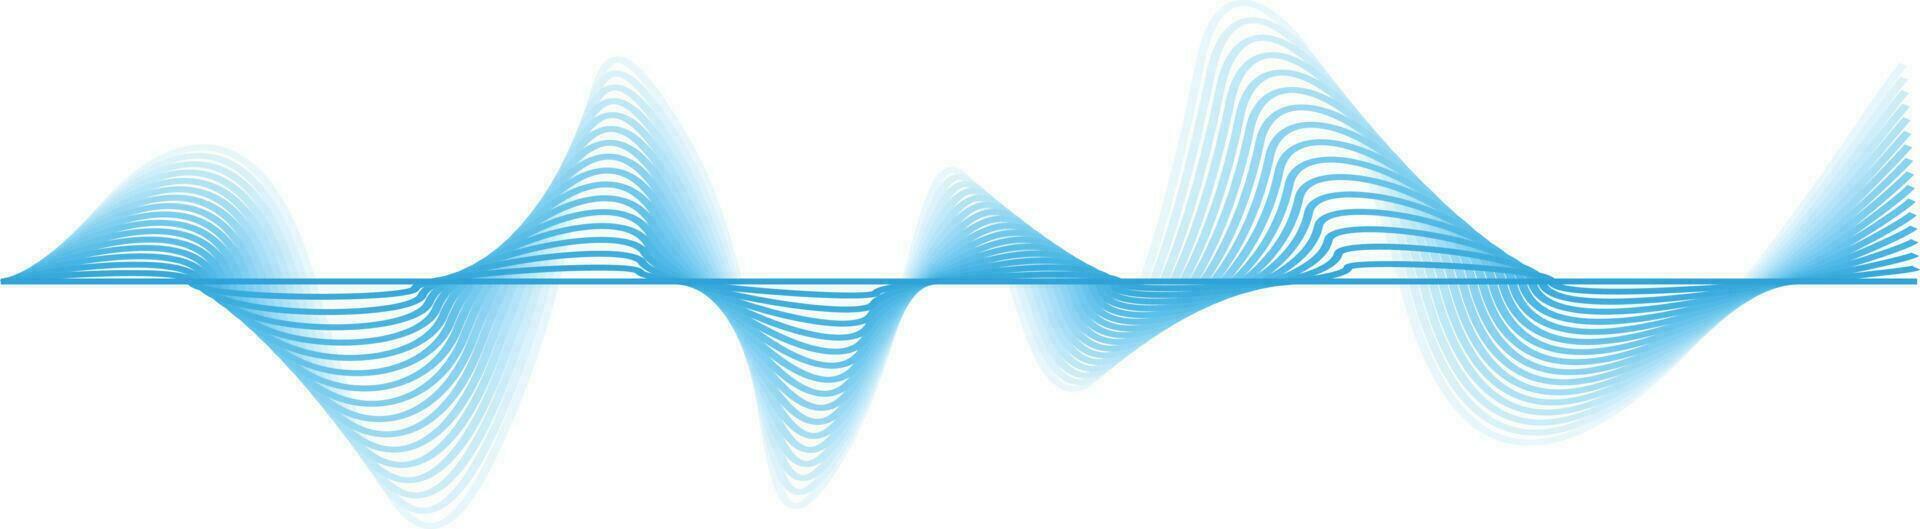 abstrakt ljud Vinka blå bakgrund vektor